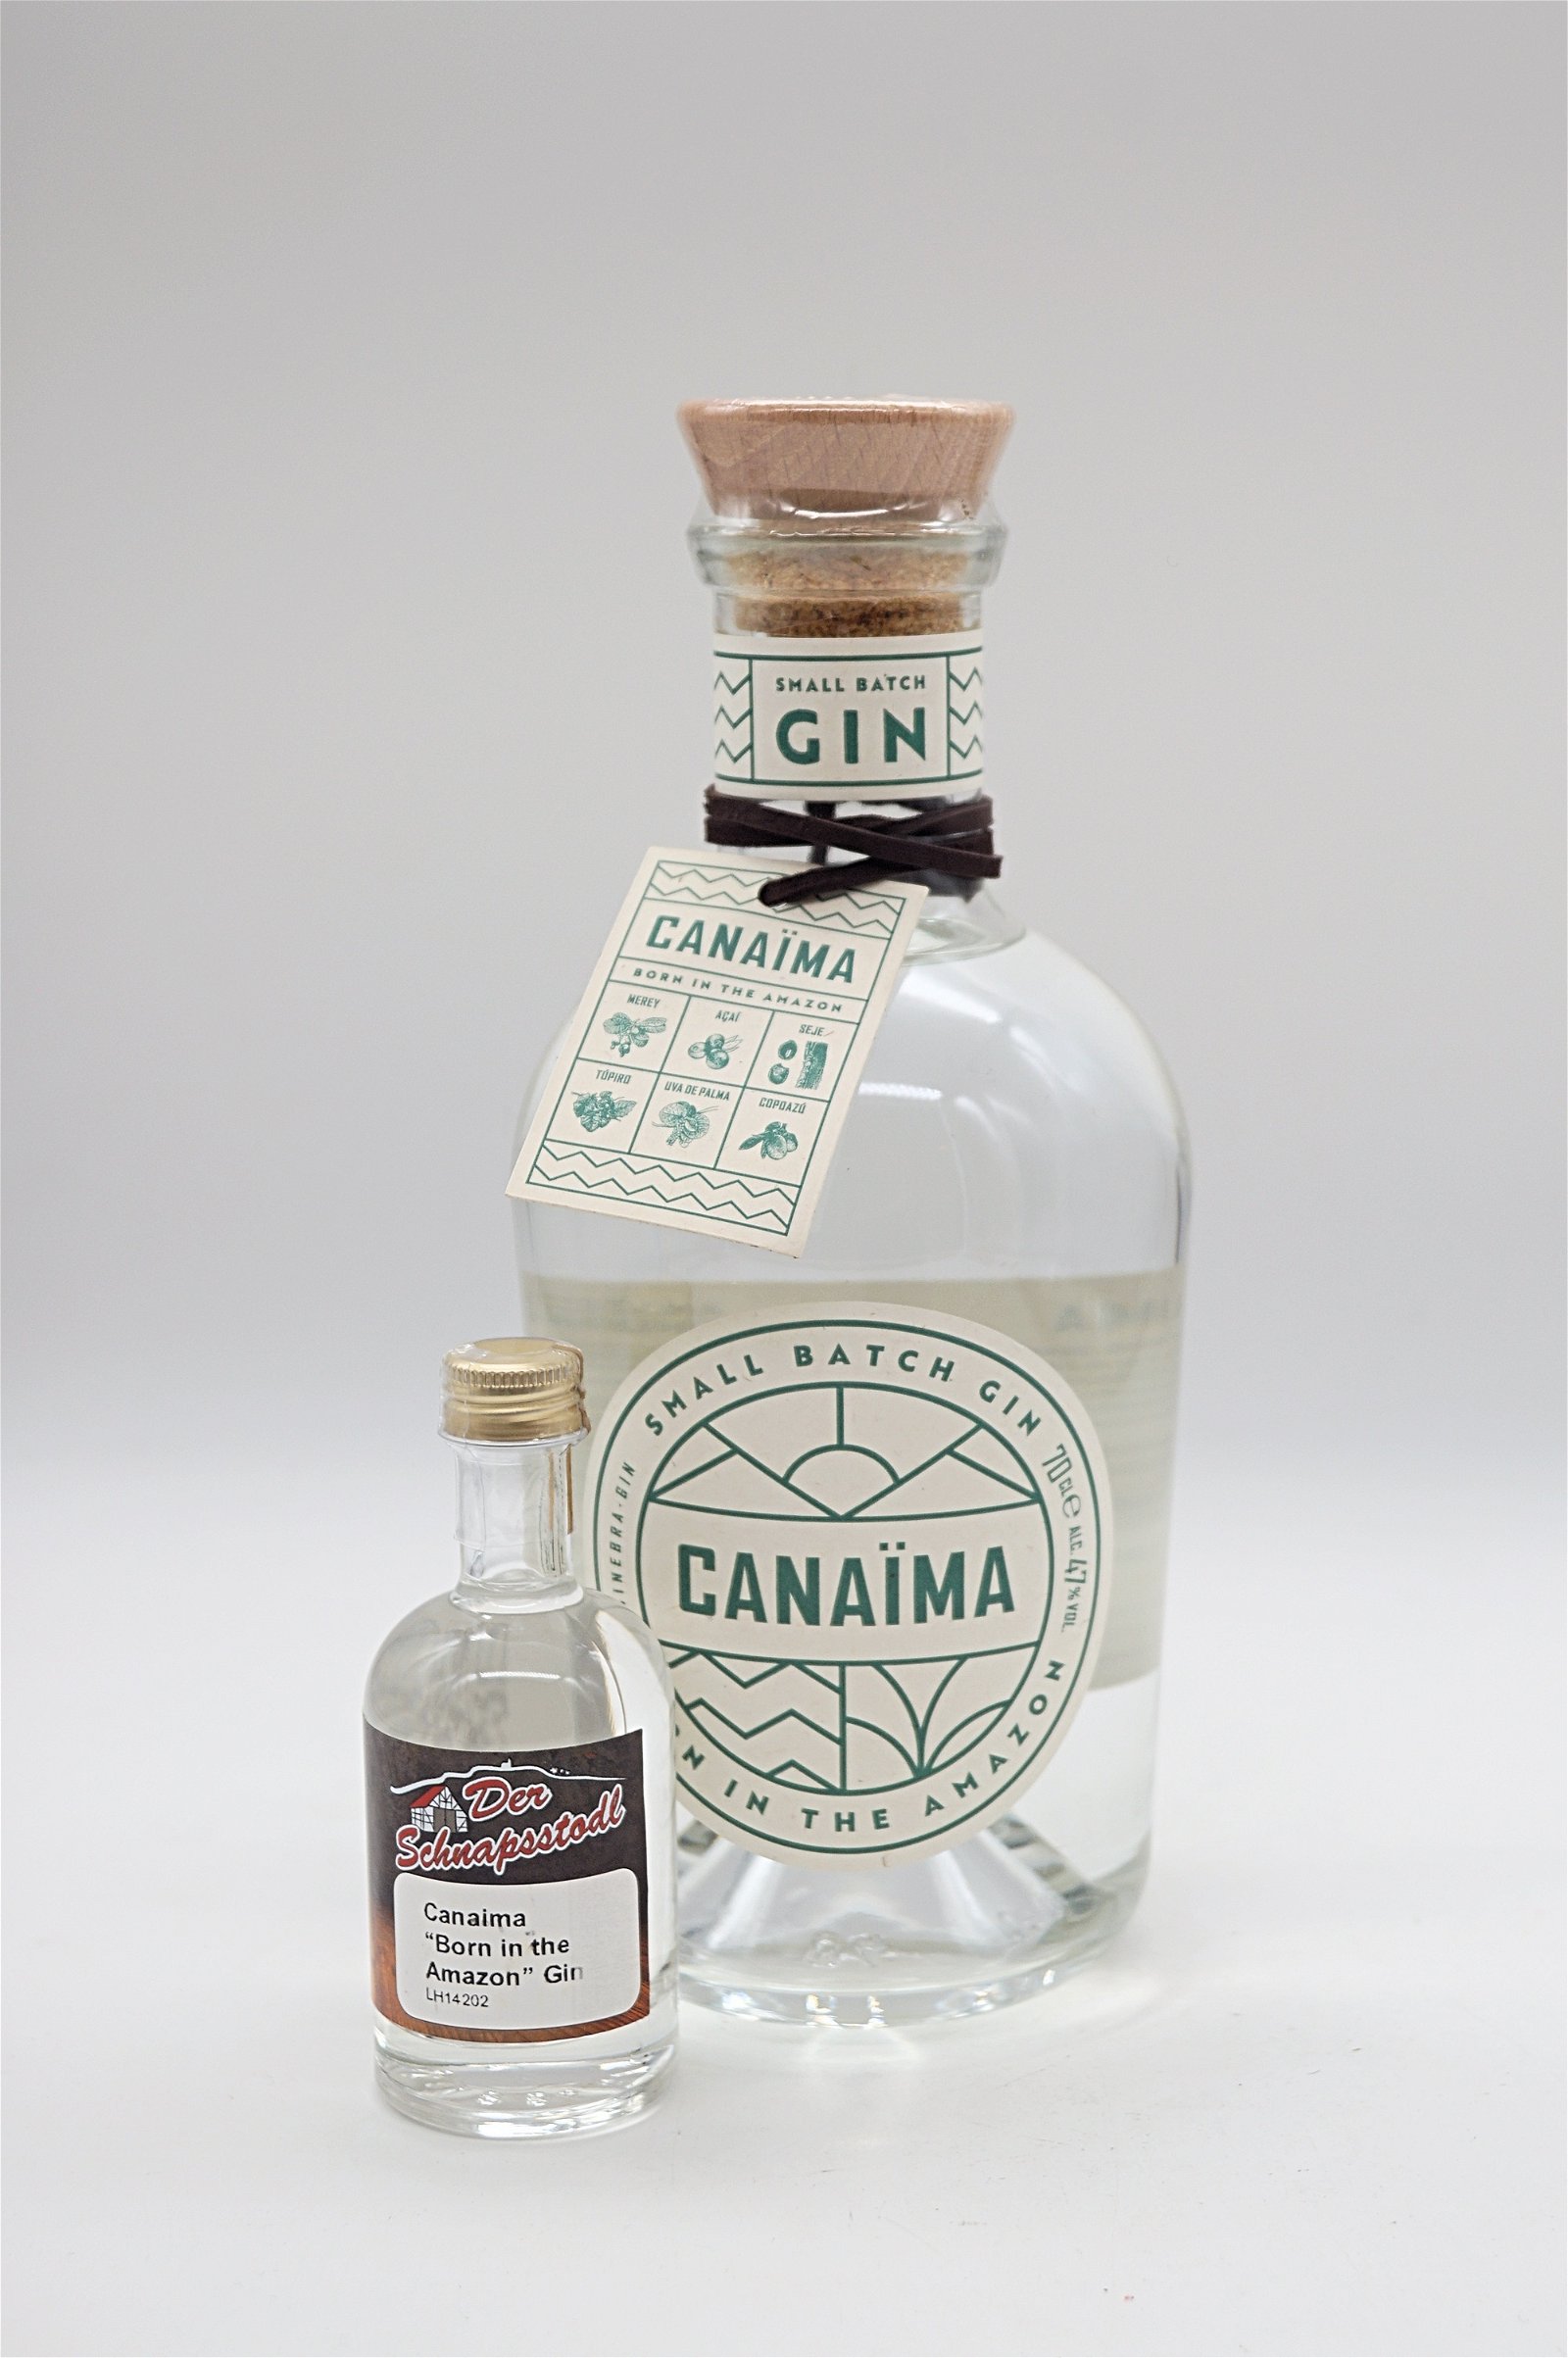 Canaima Small Batch Gin "Born in the Amazon" Sample 50 ml